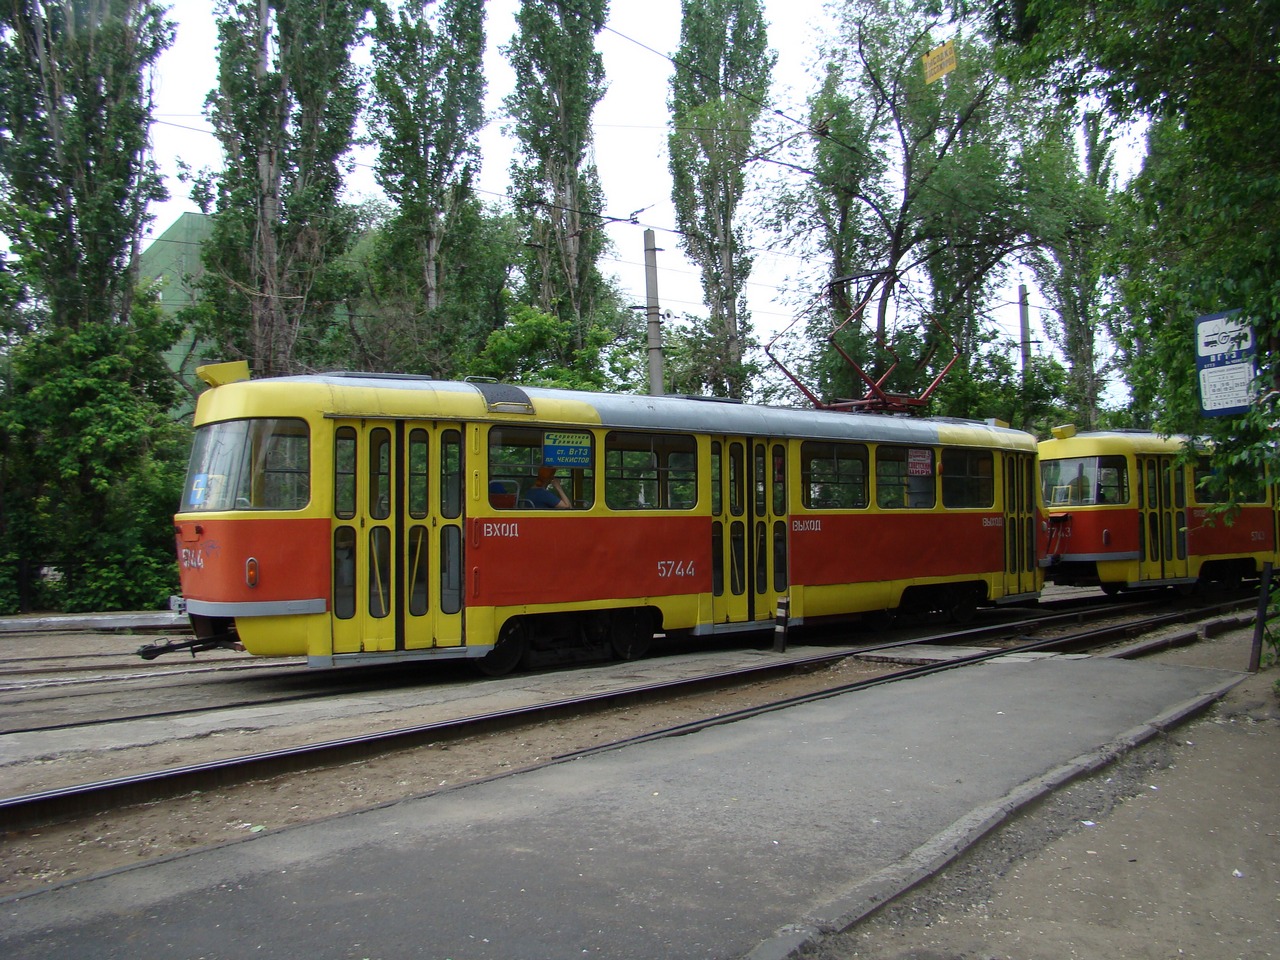 Volgograd, Tatra T3SU # 5743; Volgograd, Tatra T3SU # 5744